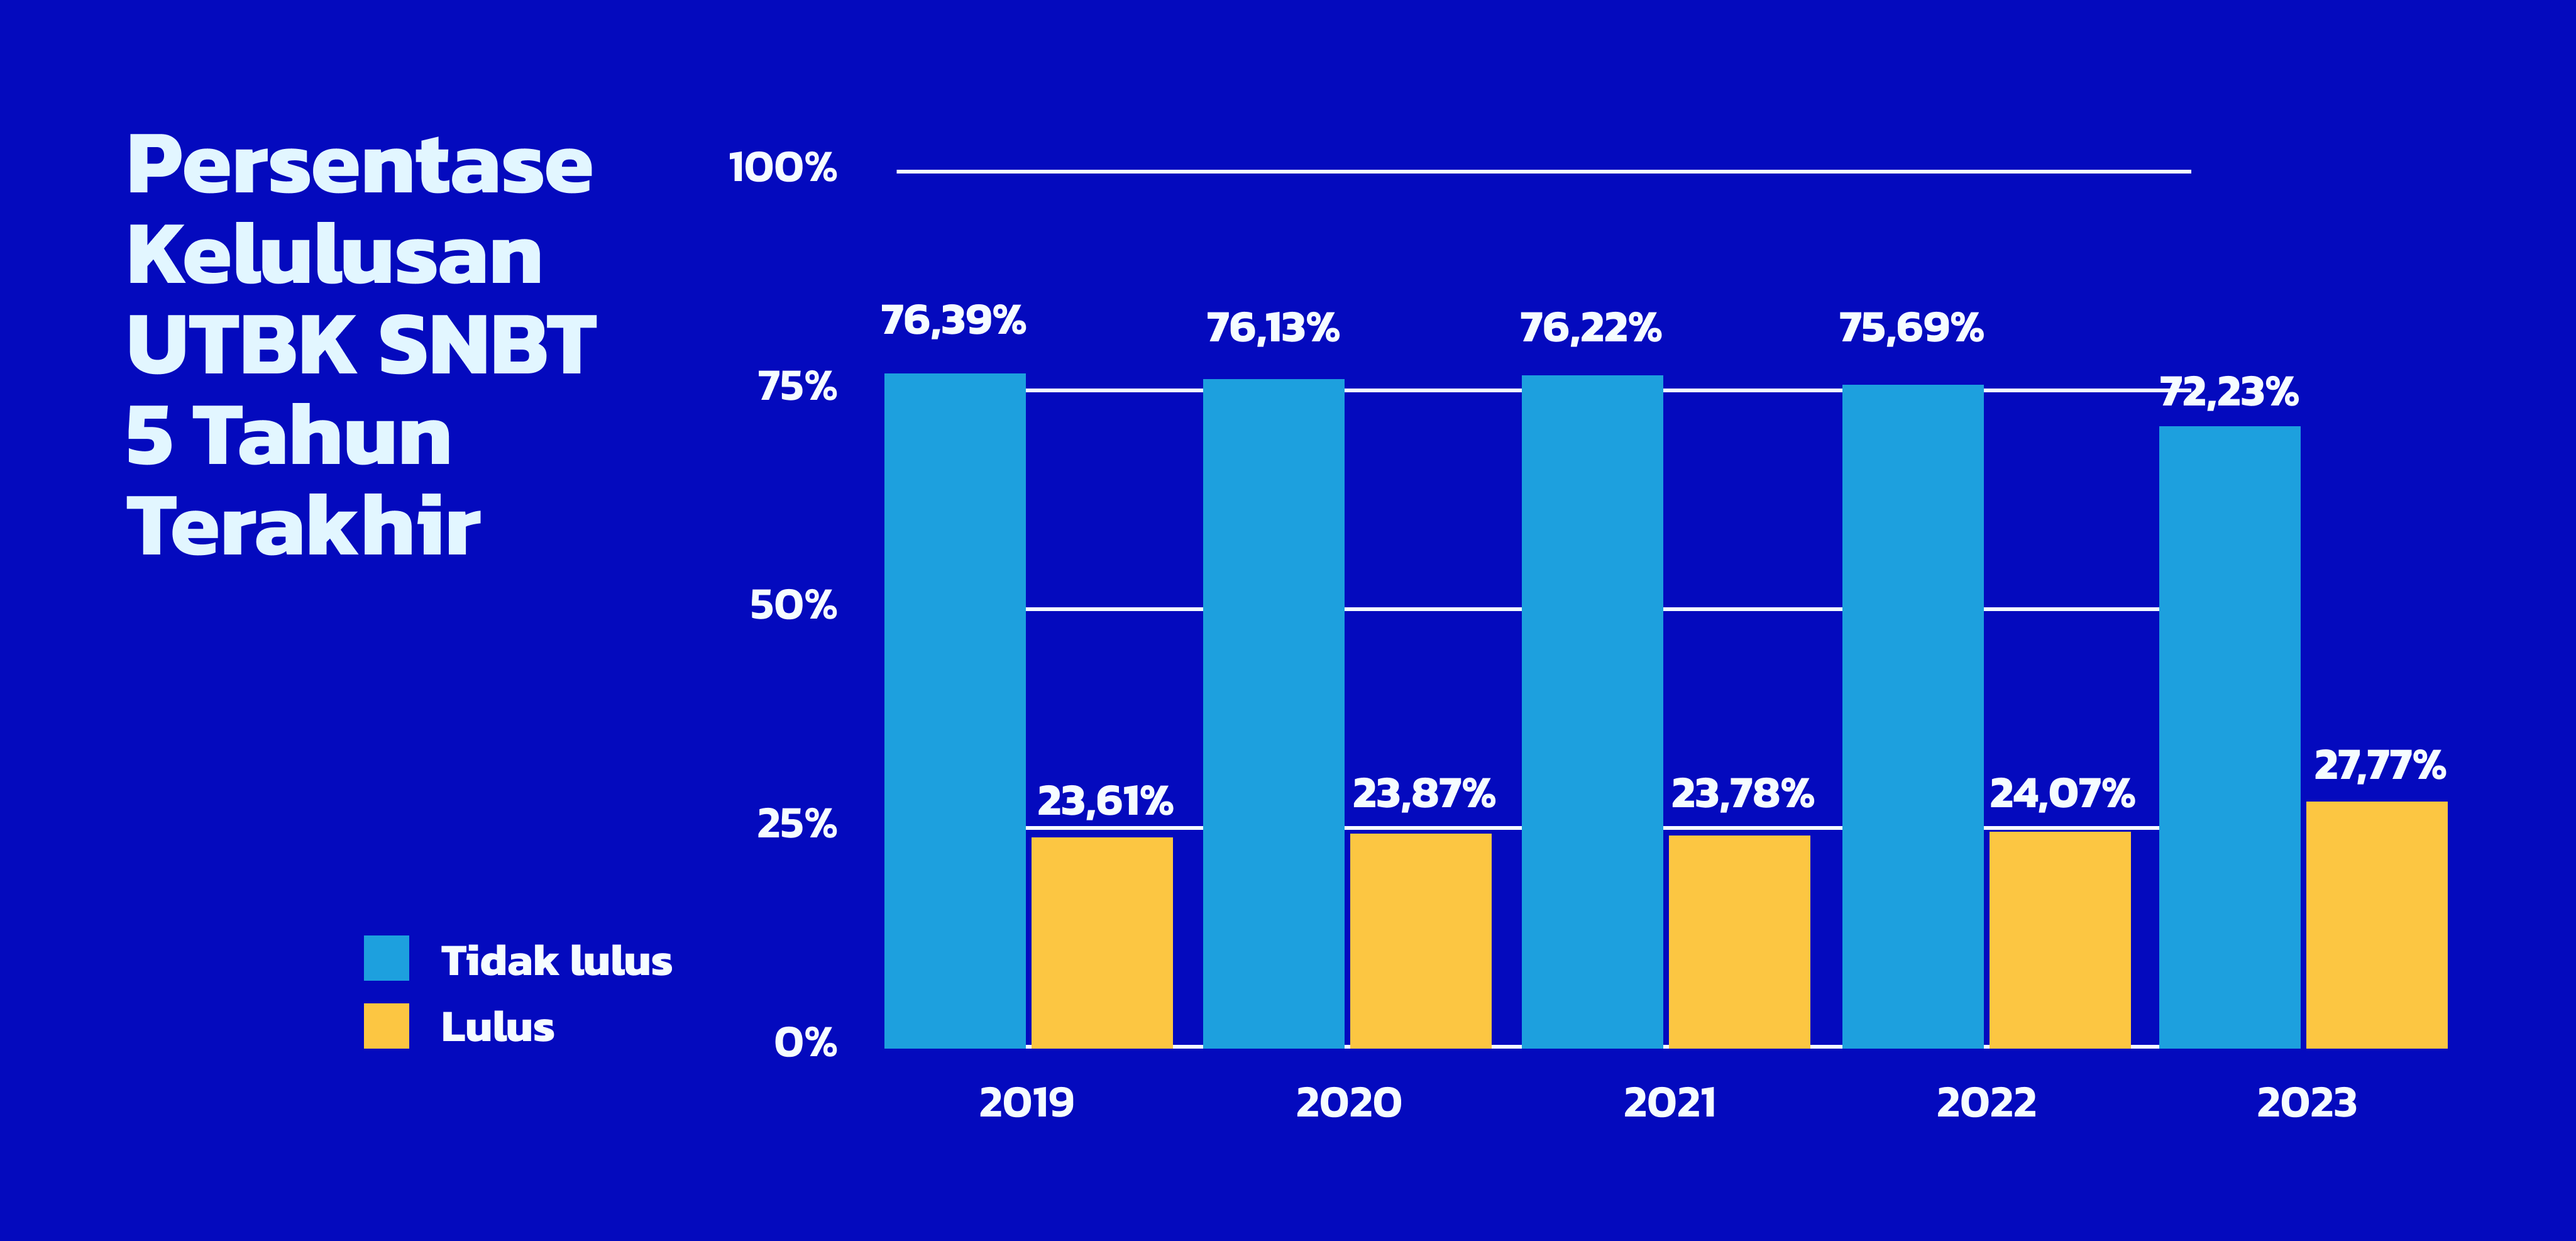 Grafik persentase kelulusan UTBK selama 5 tahun terakhir, mulai dari tahun 2019 hingga tahun 2023.